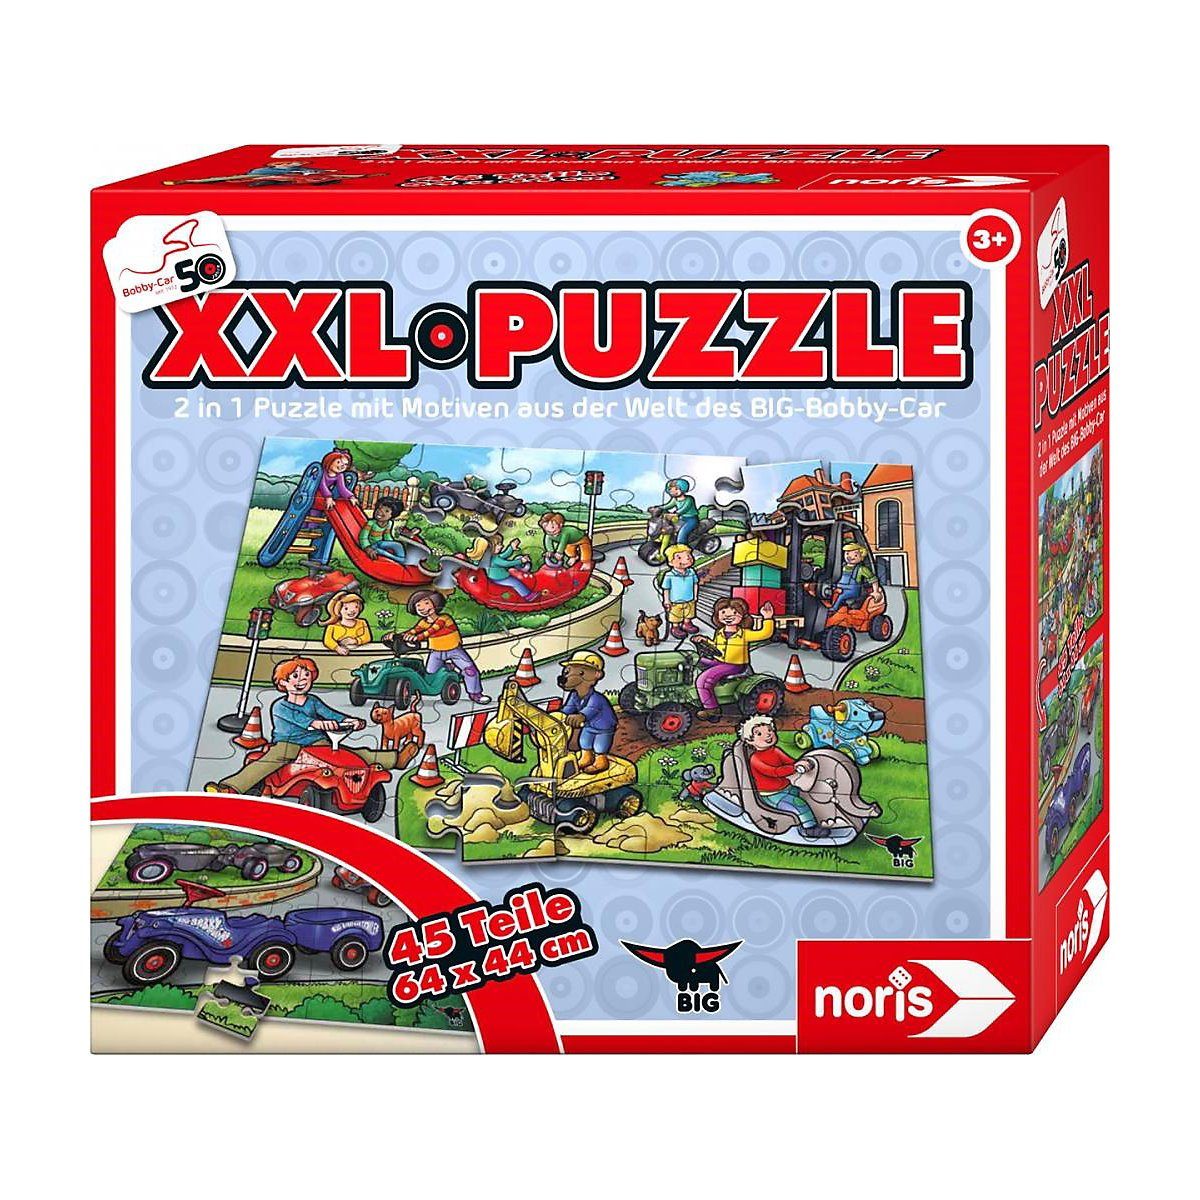 Noris Puzzle 50 Jahre BIG Bobby Car 2 in 1 XXL-Puzzle, 45 Teile, Puzzleteile